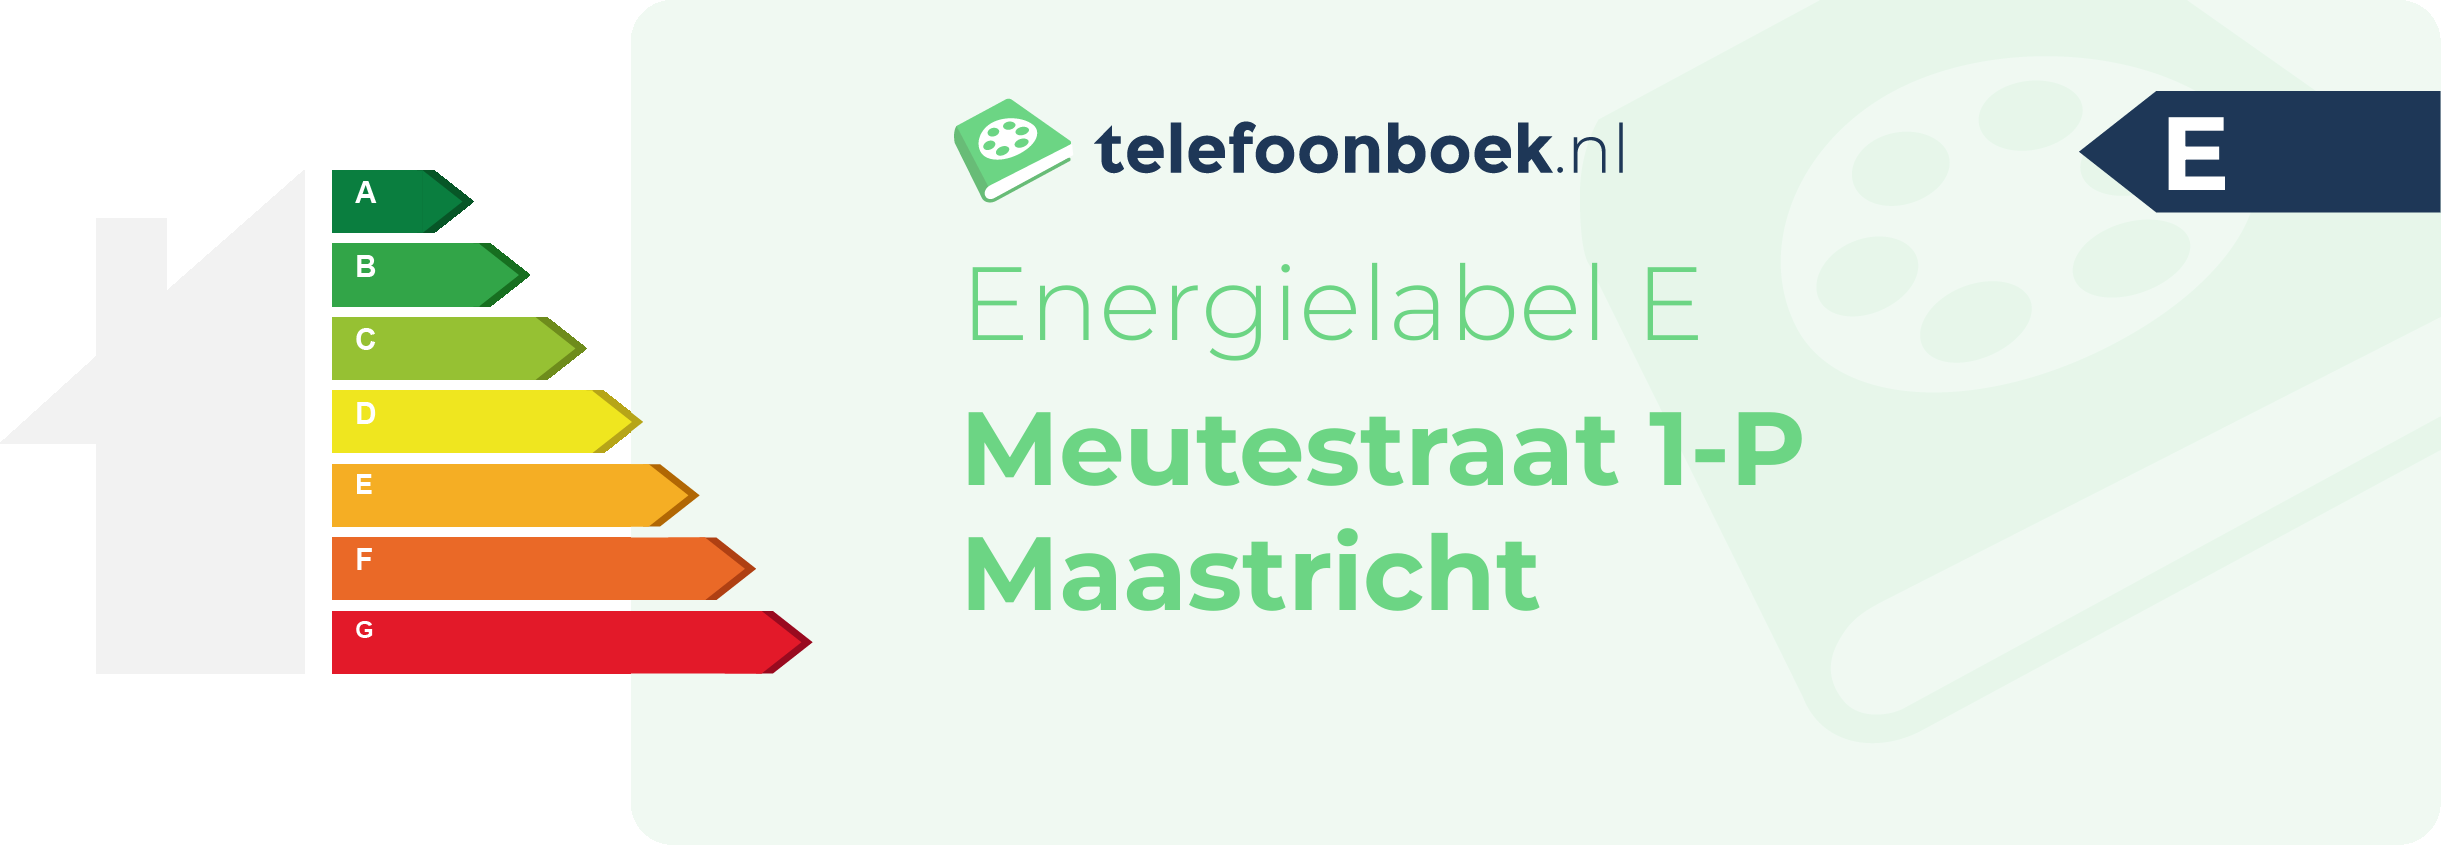 Energielabel Meutestraat 1-P Maastricht